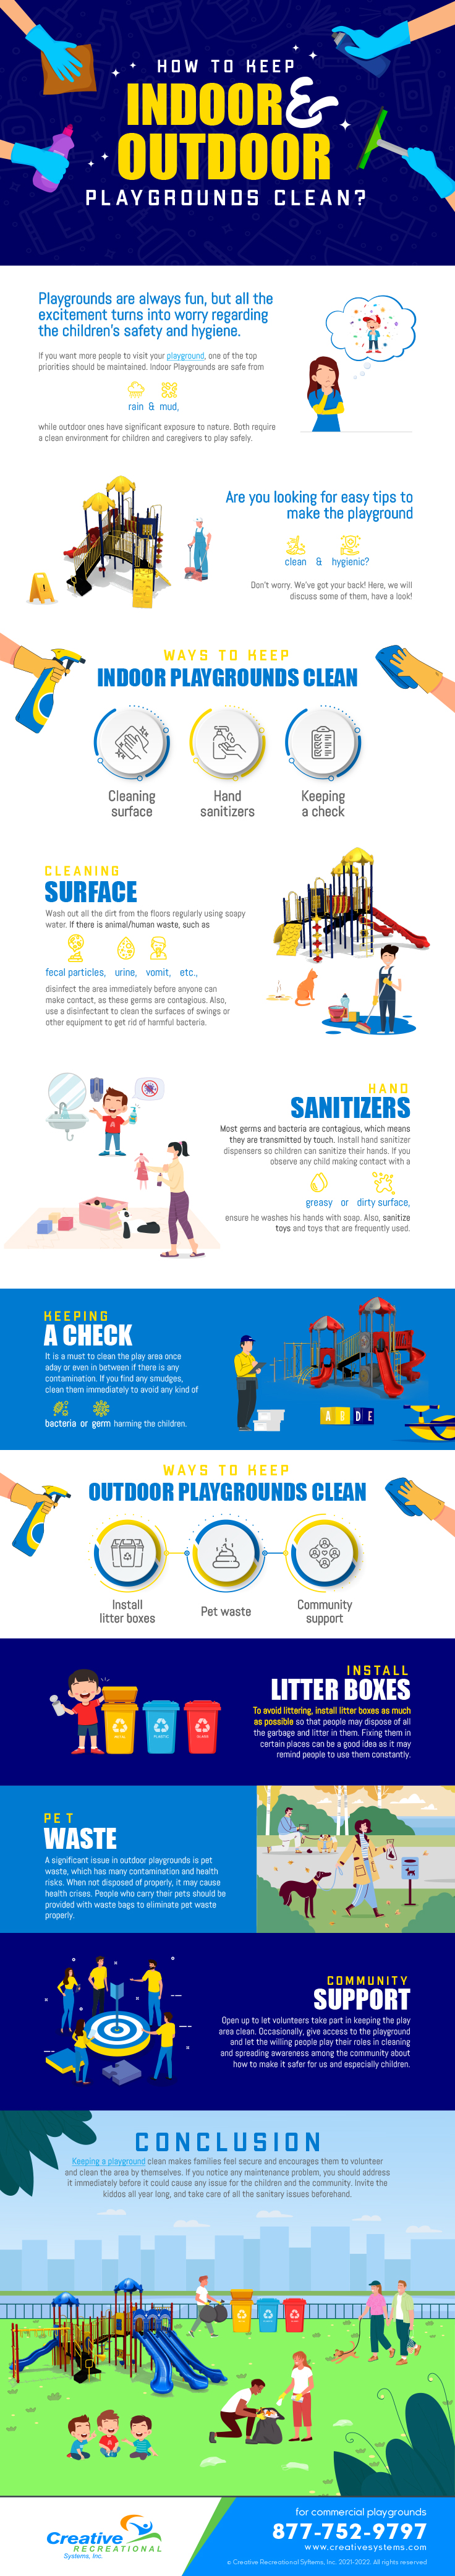 Ways-To-Keep-Indoor-Playgrounds-Clean-34